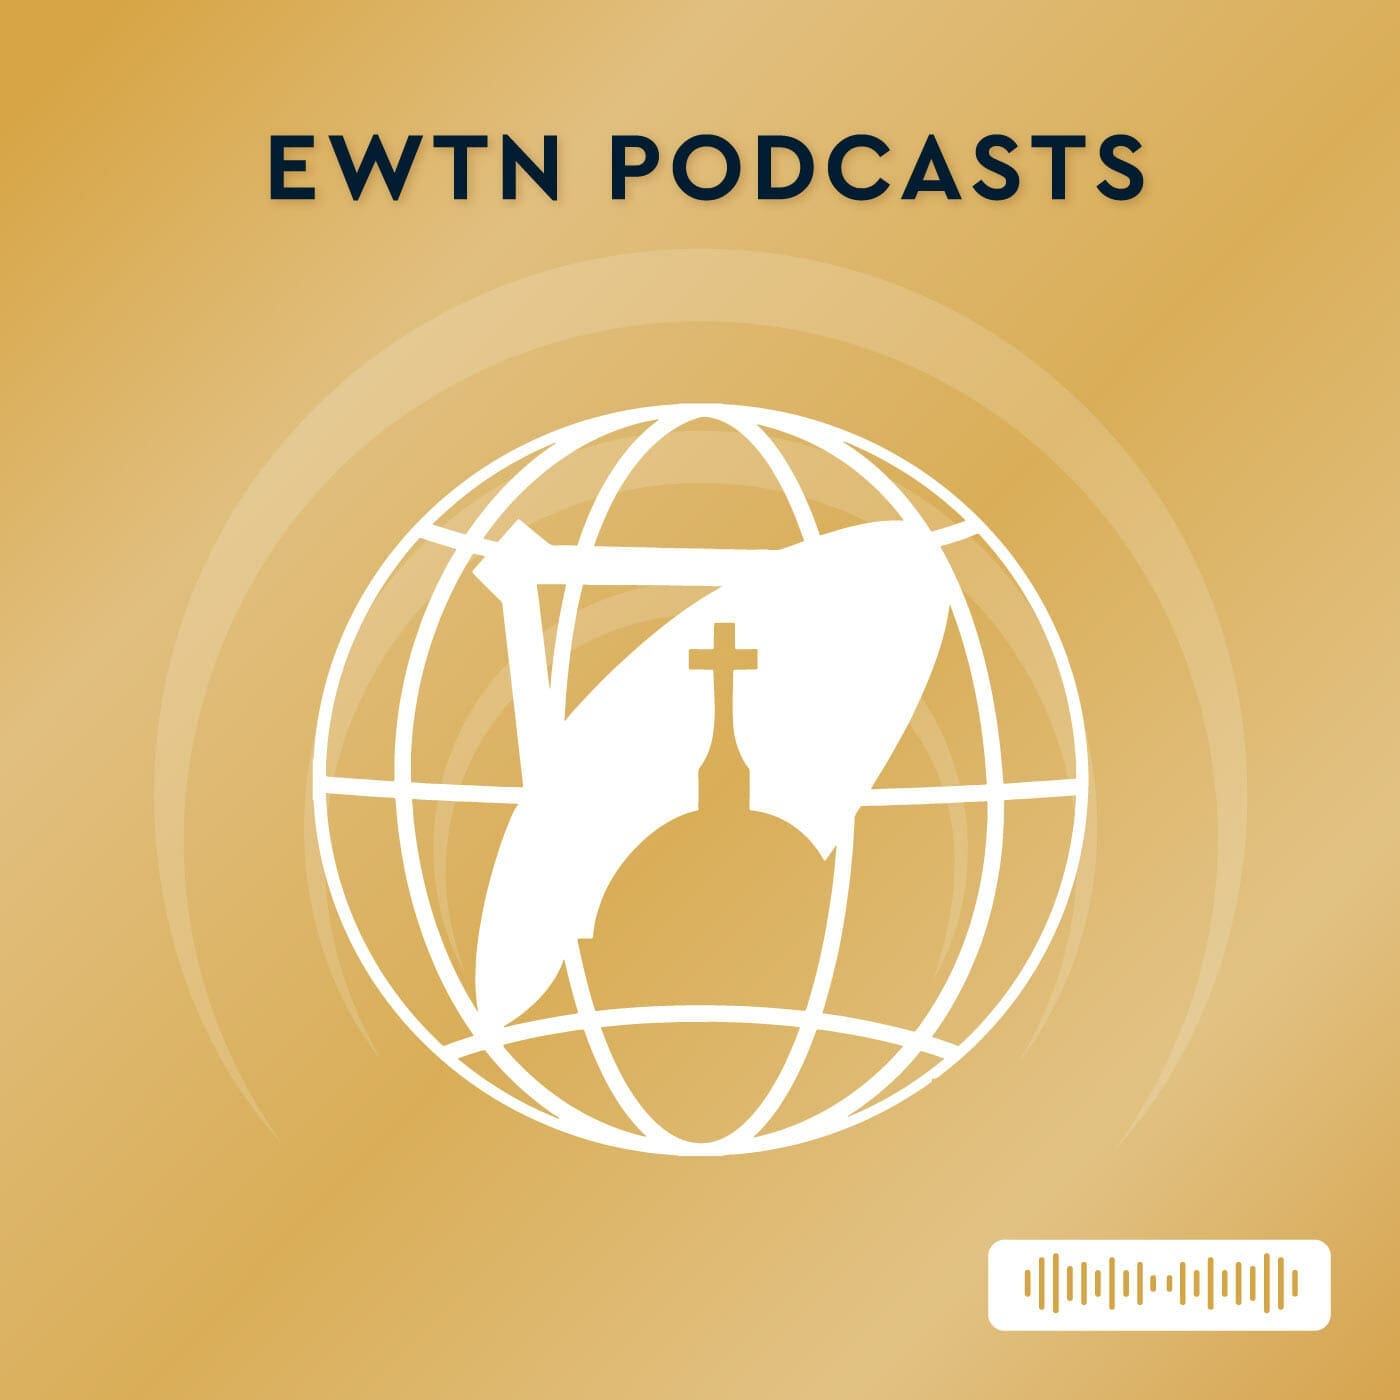 SOTC-podcasts-ewtn